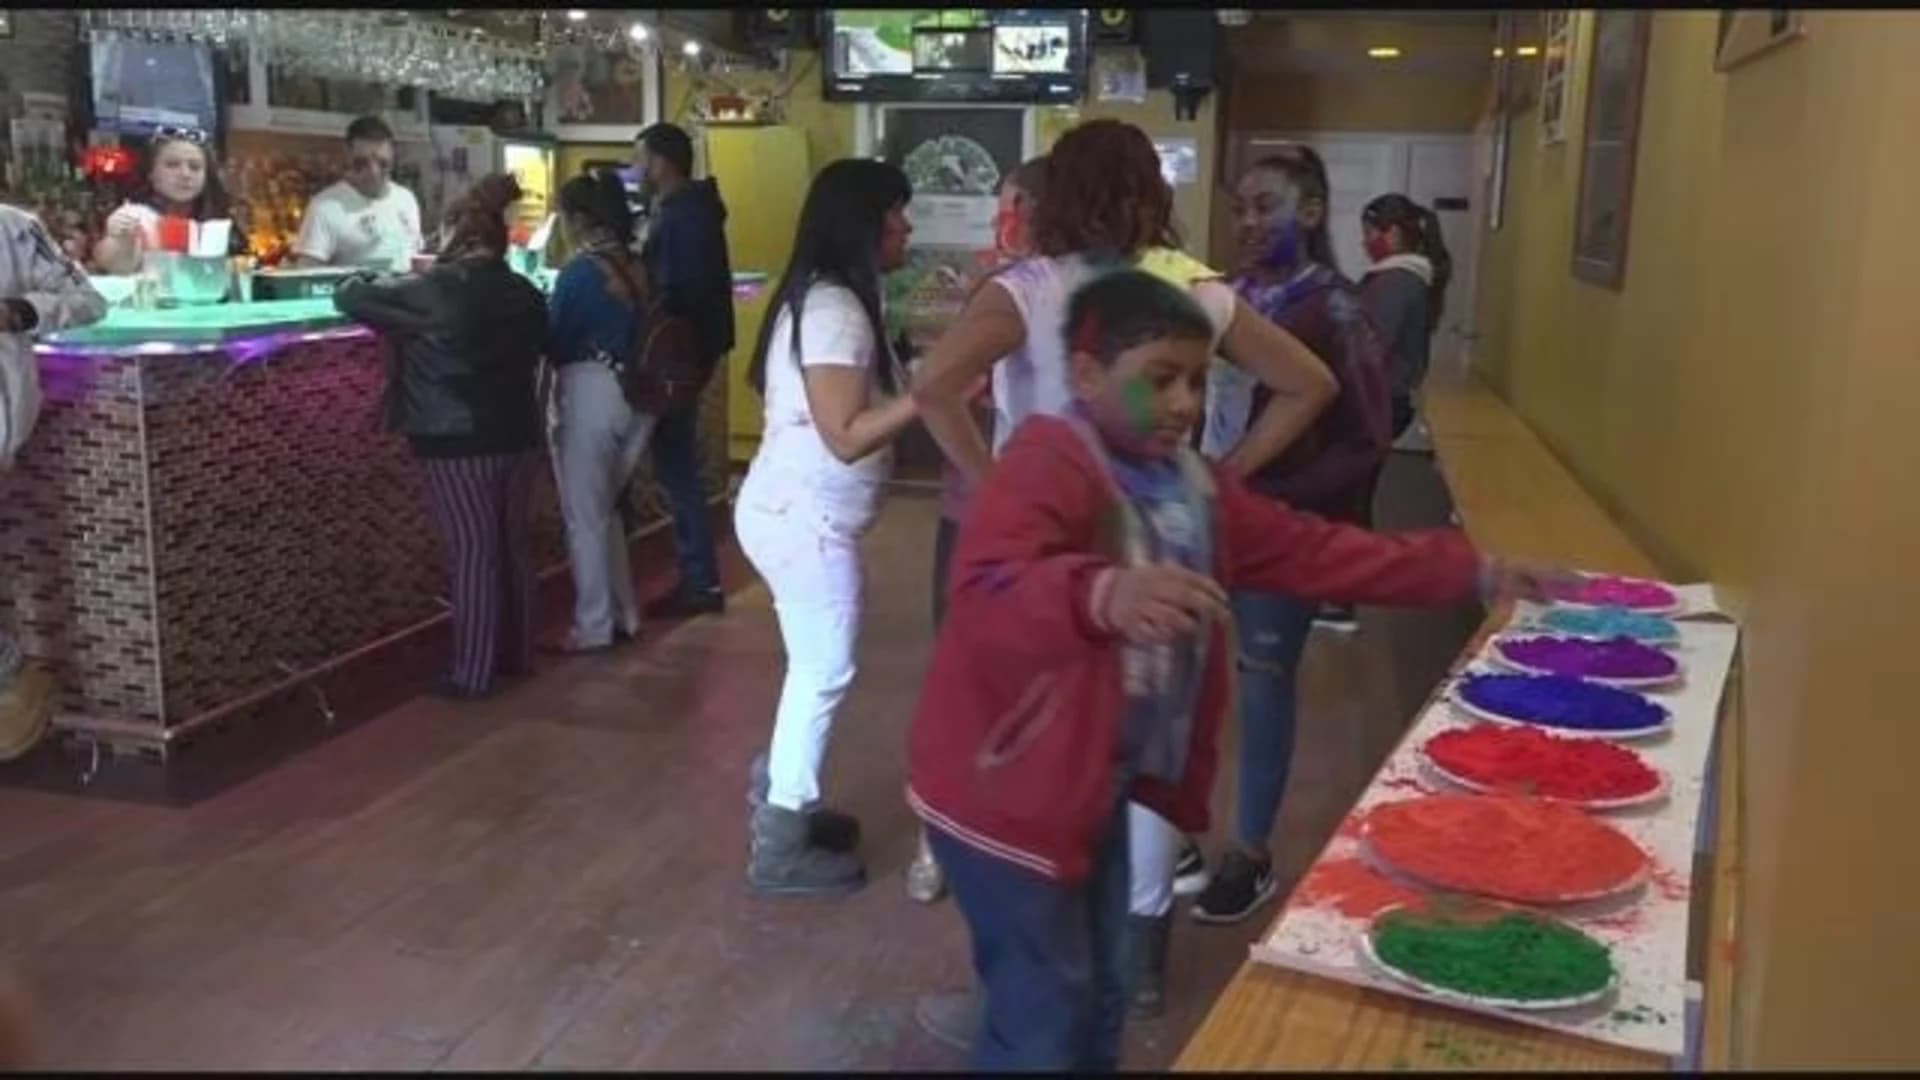 Colorful Holi celebration held at Castle Hill Avenue restaurant